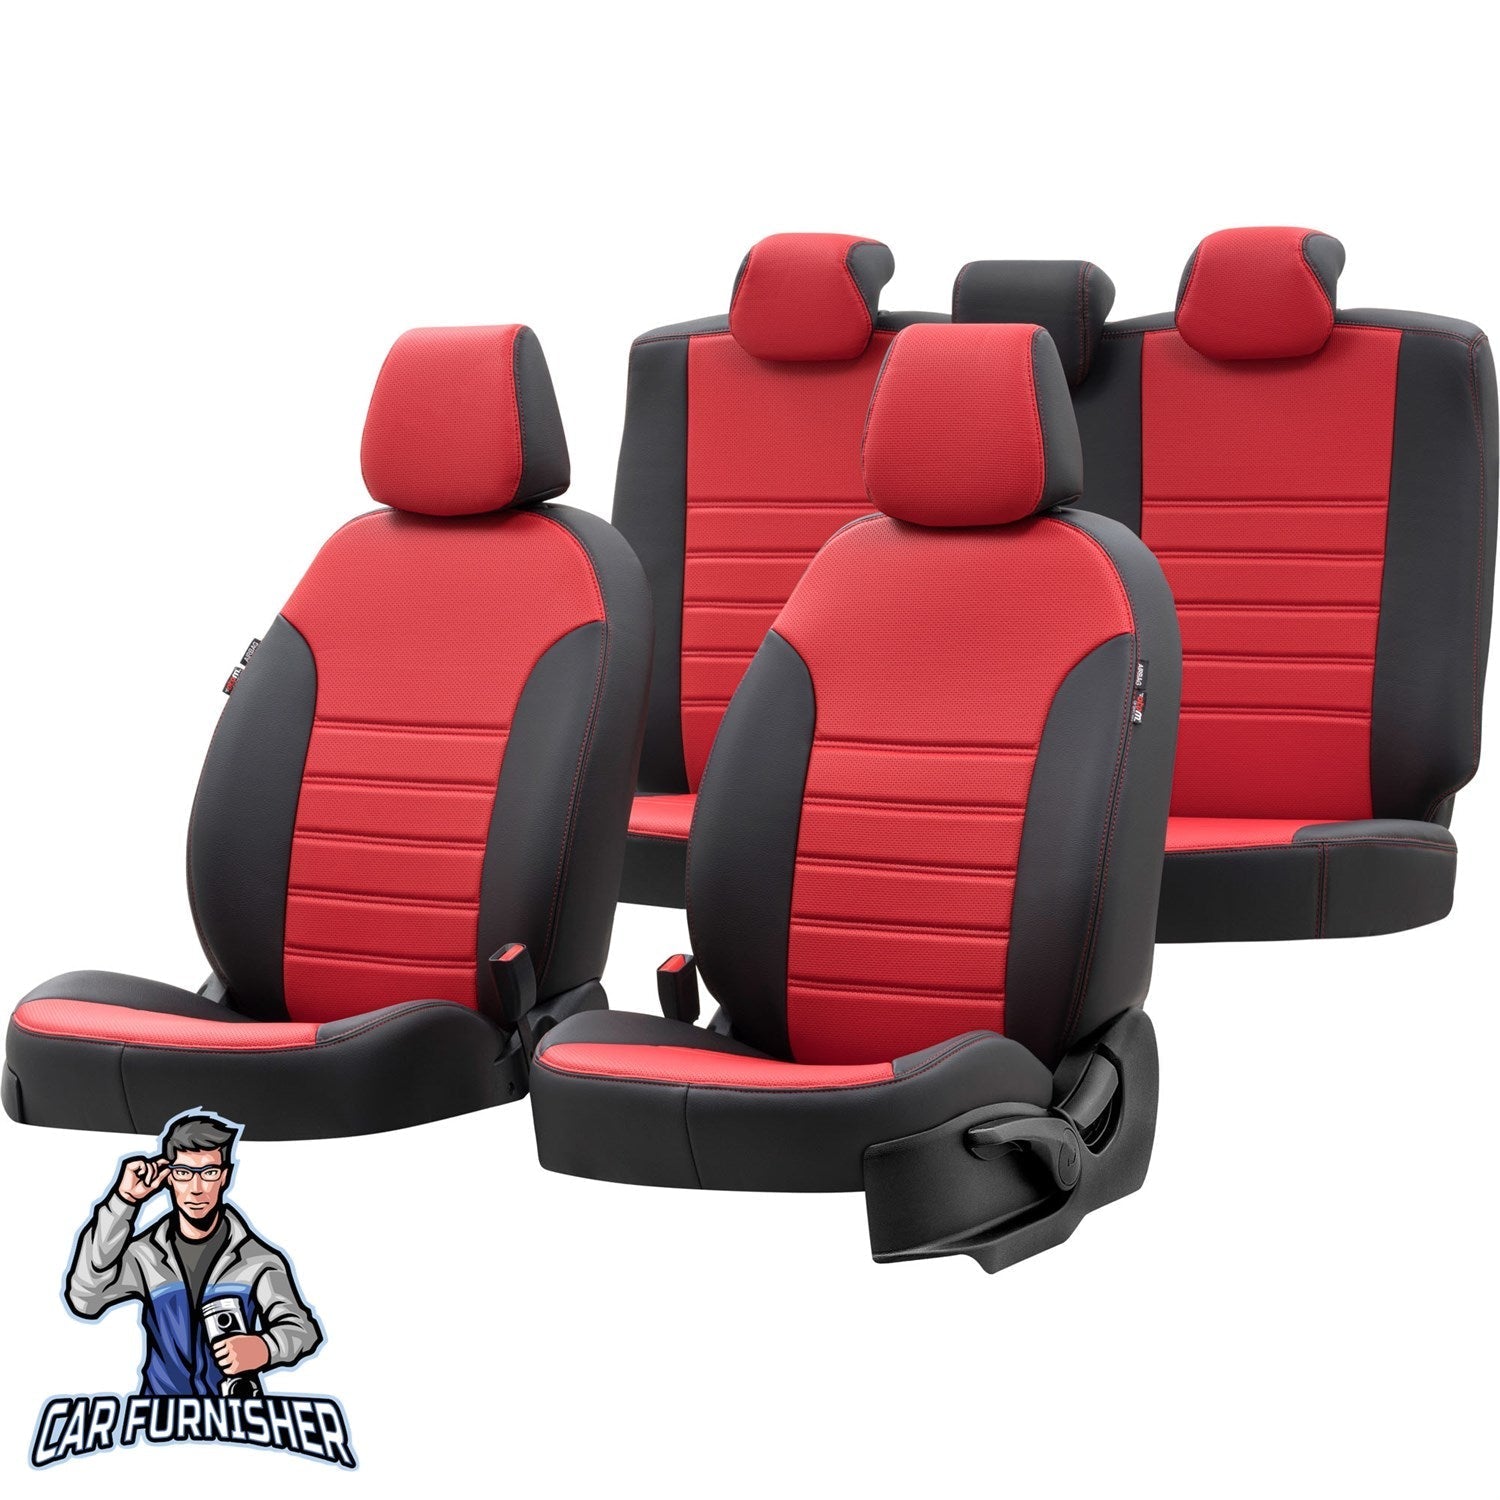 Fiat Bravo Car Seat Covers 2007-2013 New York Design Red Full Set (5 Seats + Handrest) Leather & Fabric